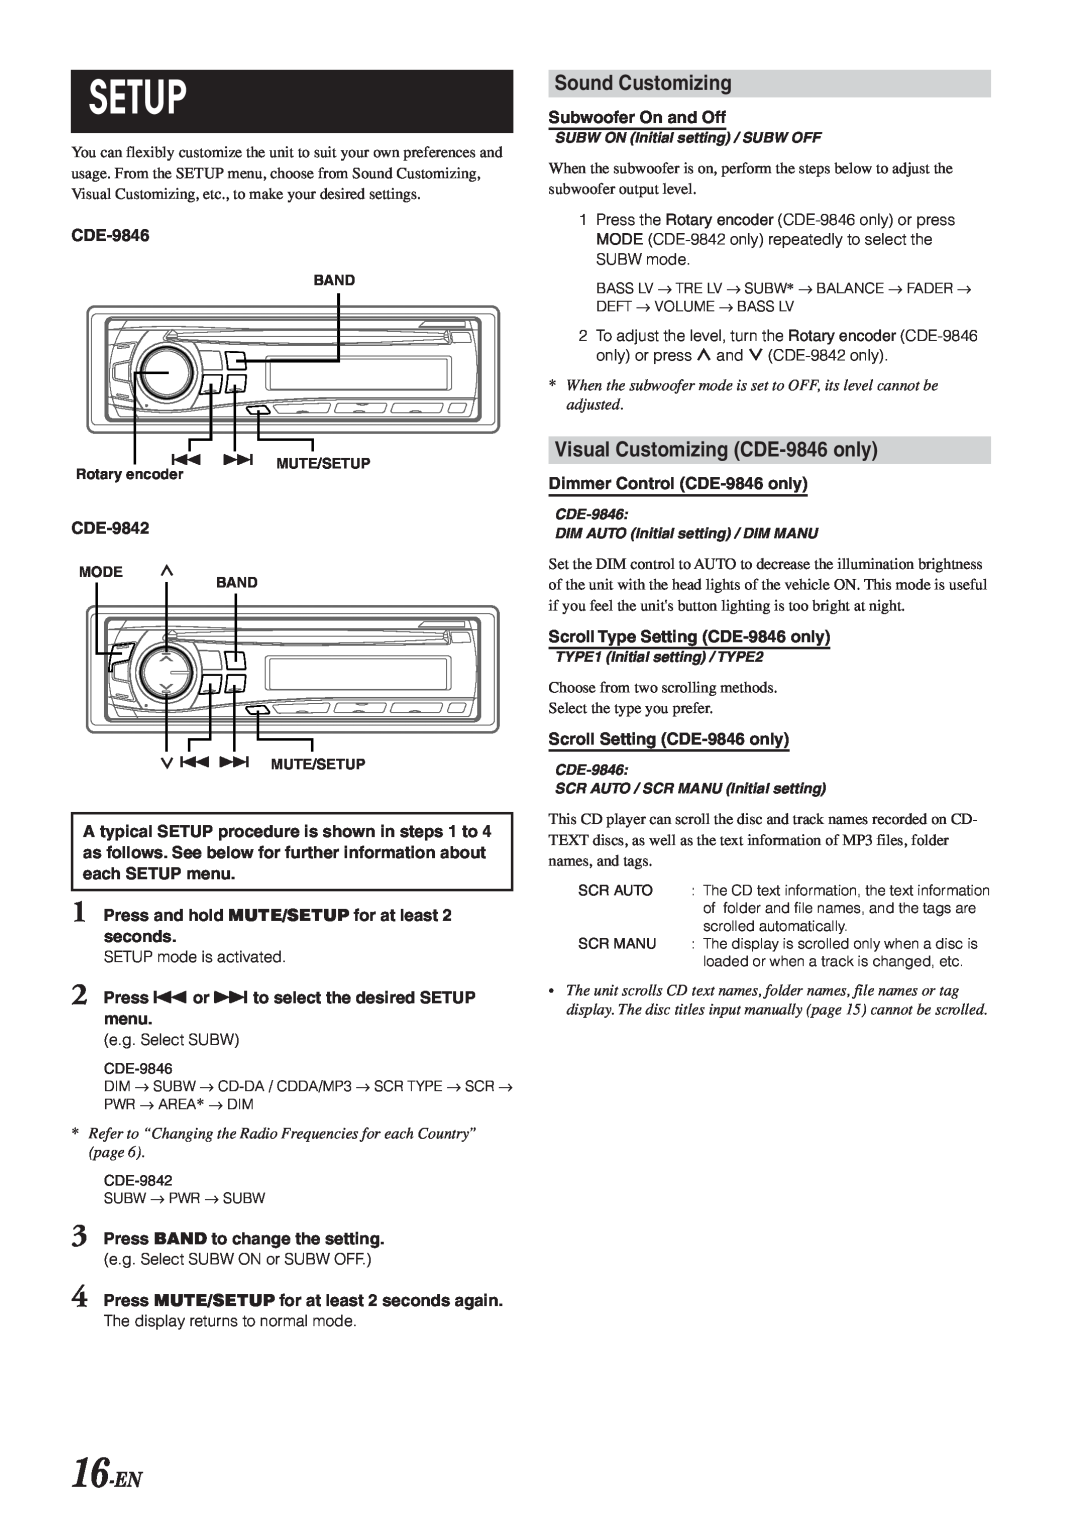 Alpine CDE-9842 owner manual Setup, Sound Customizing, Visual Customizing CDE-9846only, 16-EN 